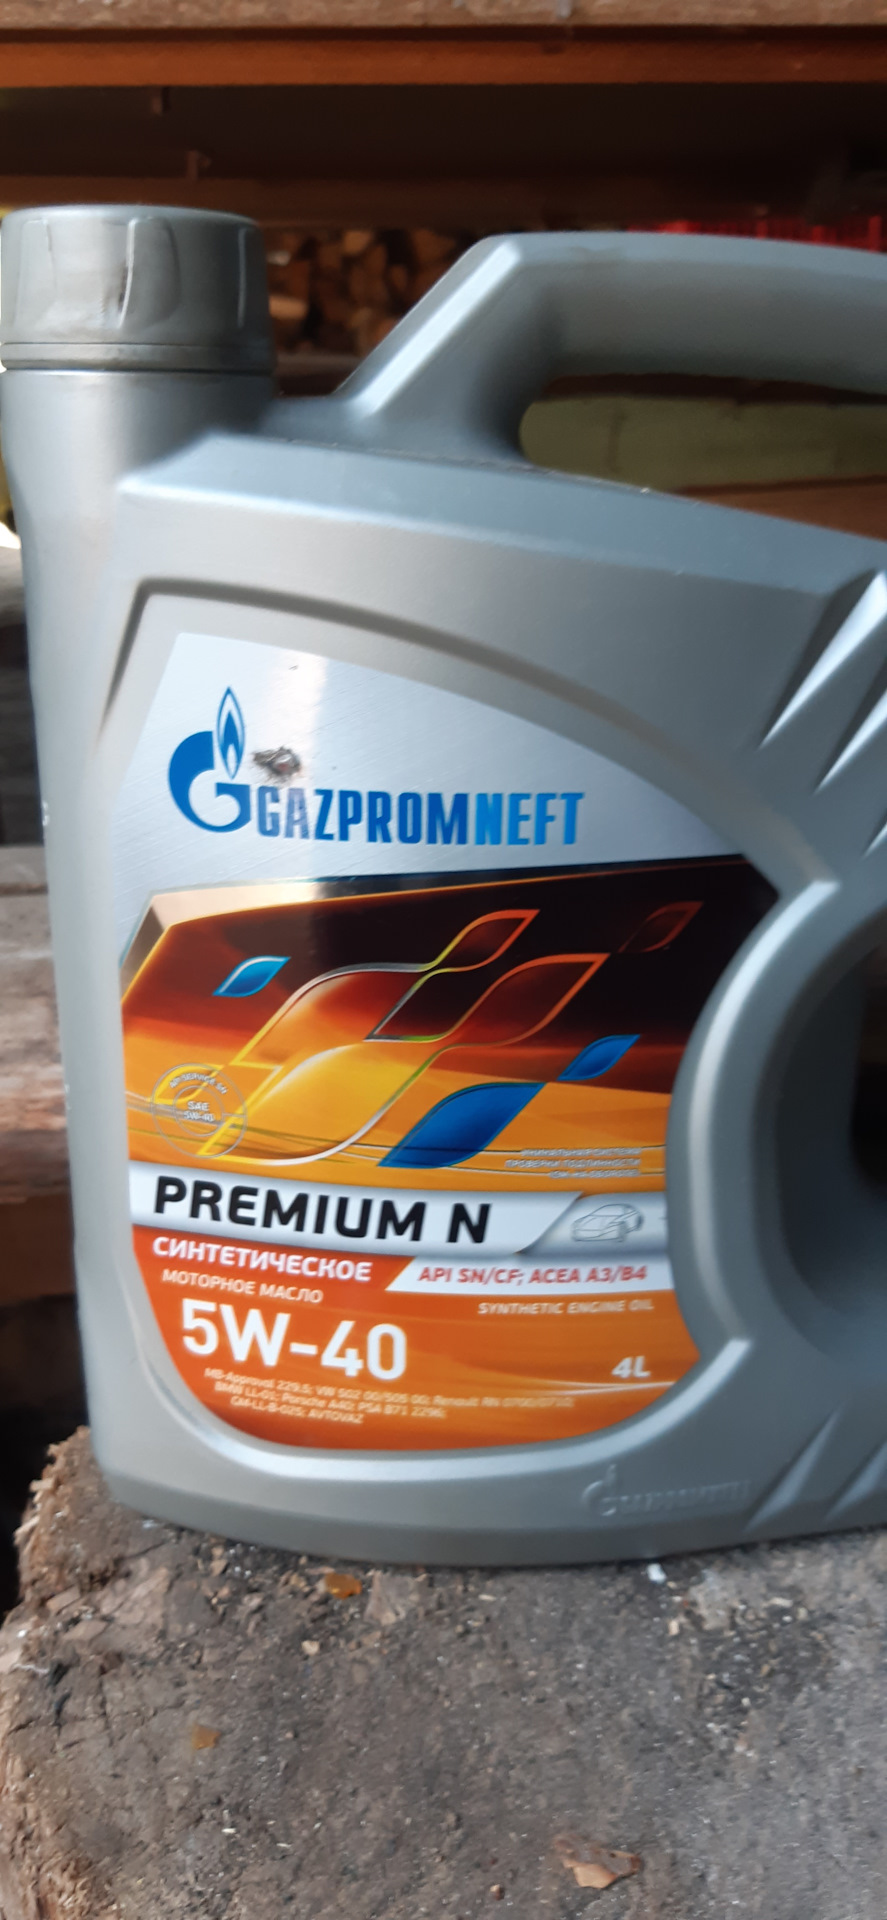 Масло газпромнефть 5w40 premium. Gazpromneft Premium n 5w-40. Масло трансмиссионное Газпромнефть Drive 2.